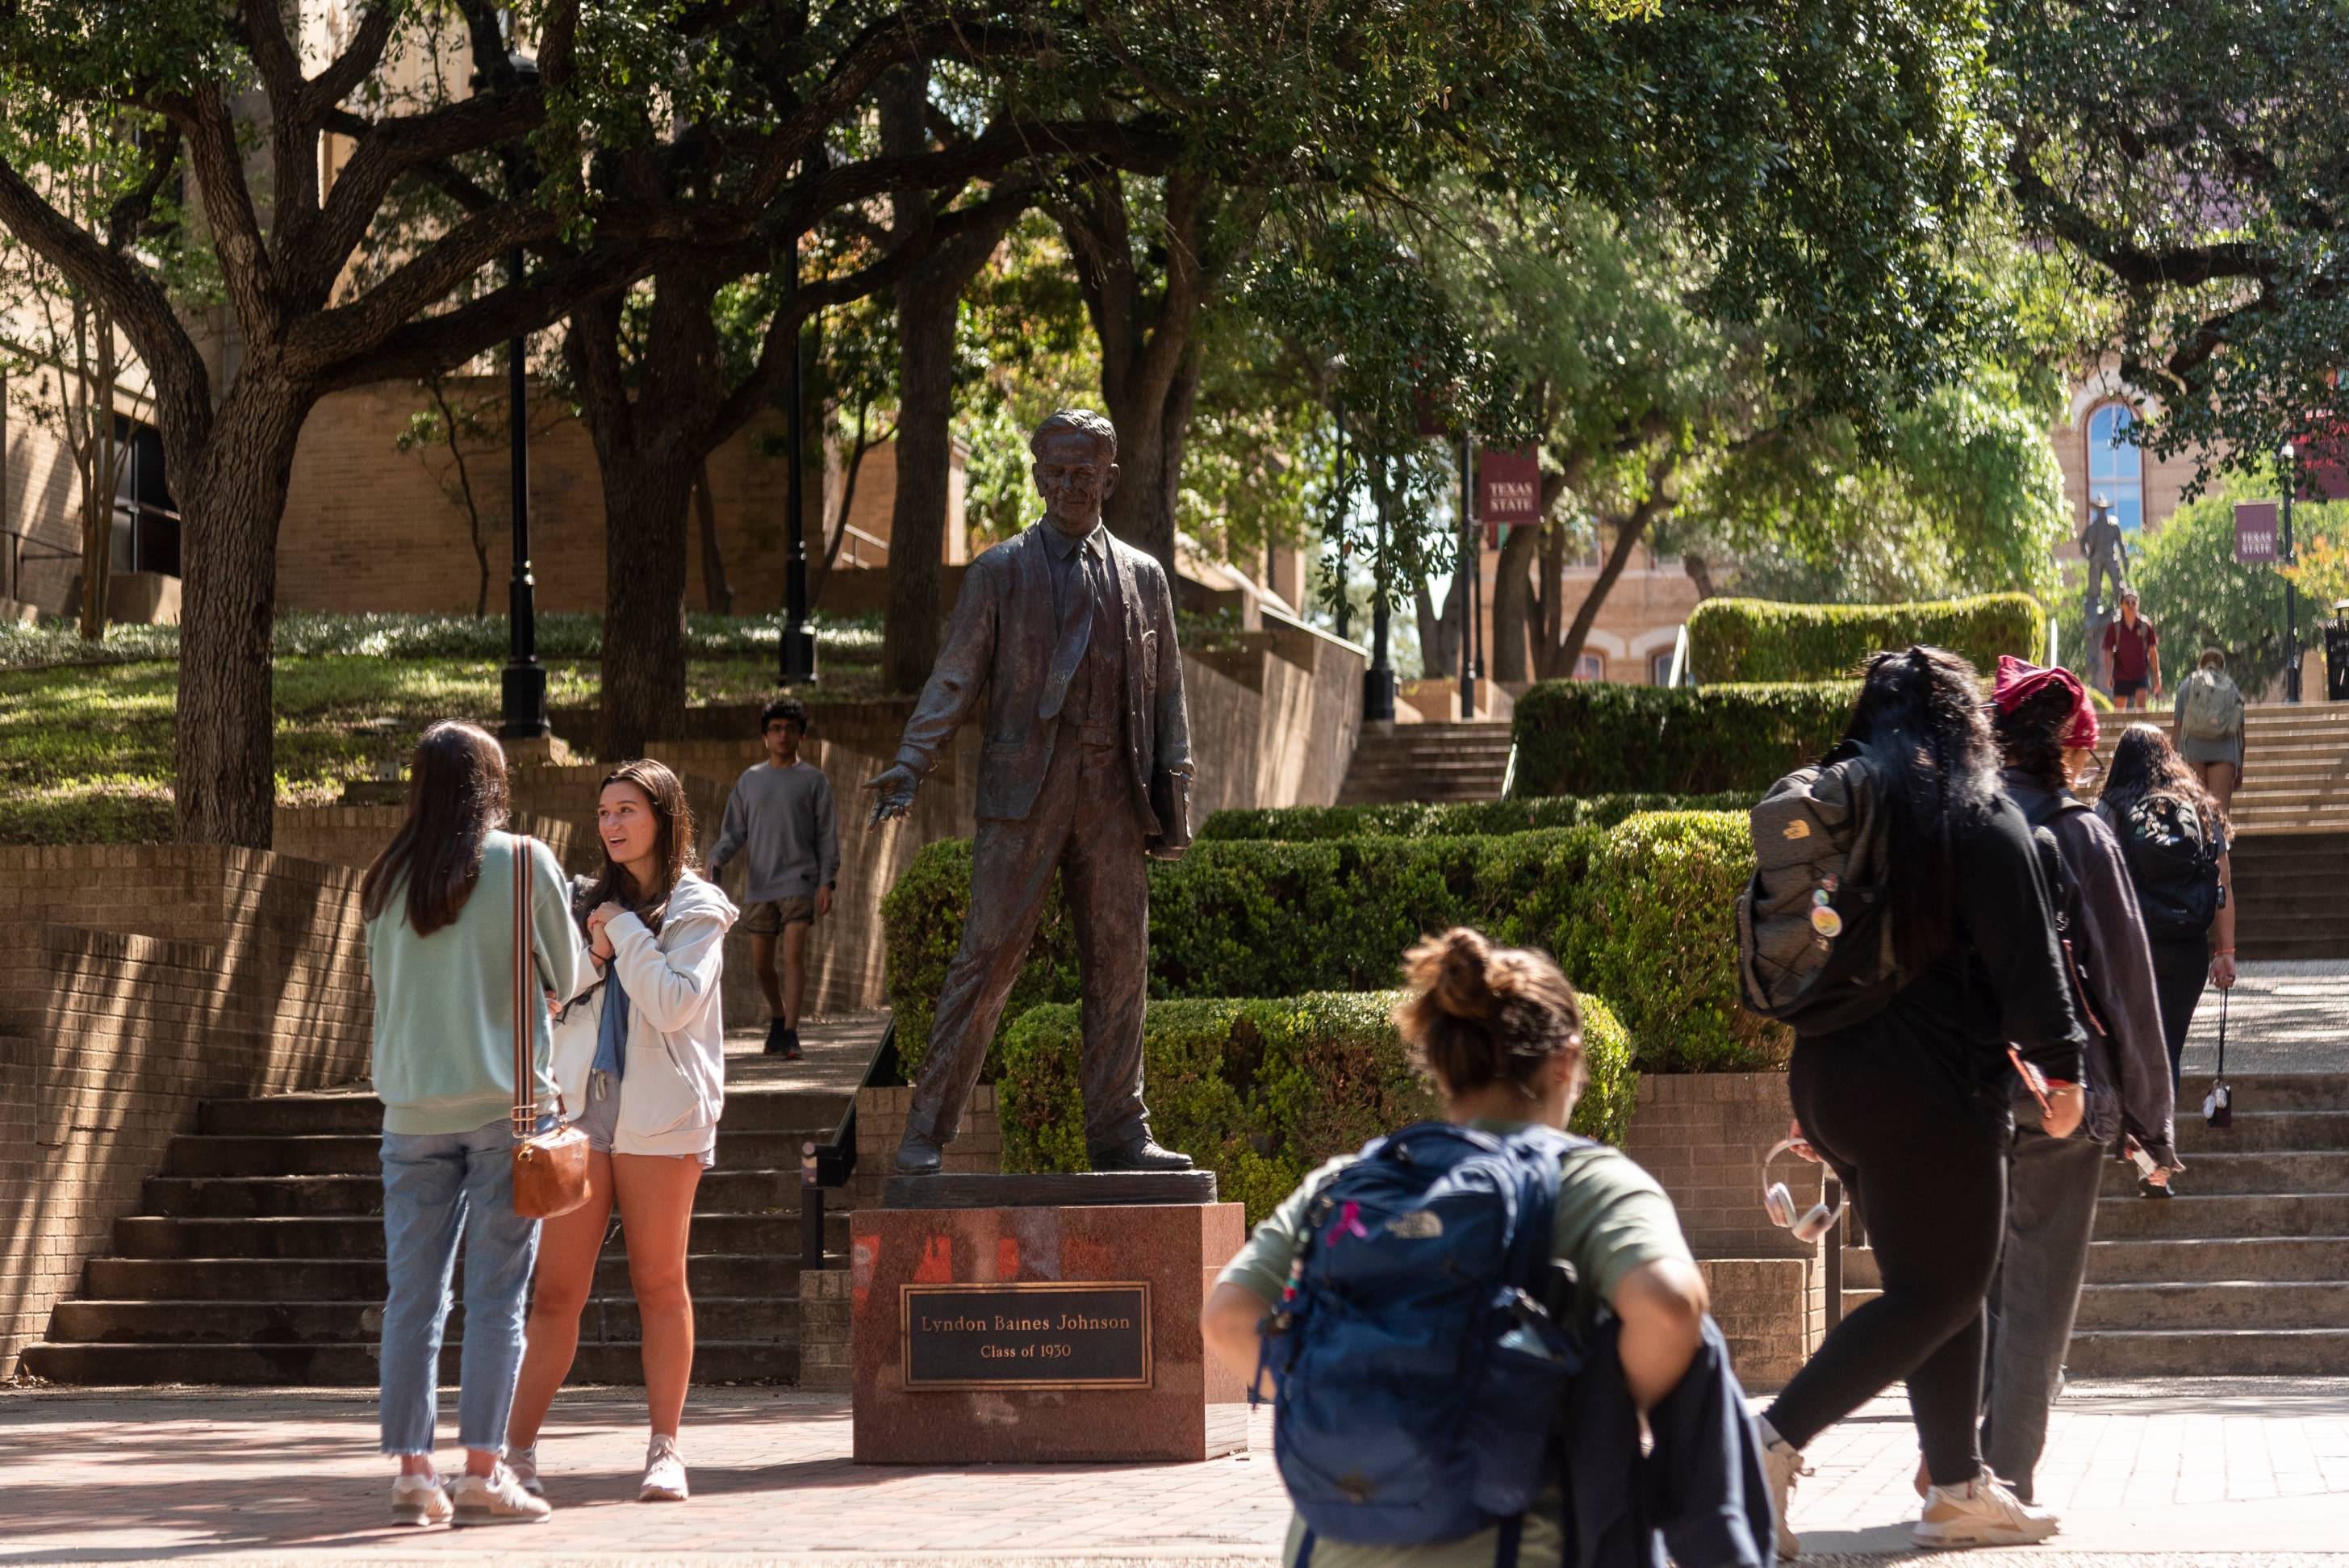 Student walking by LBJ statue